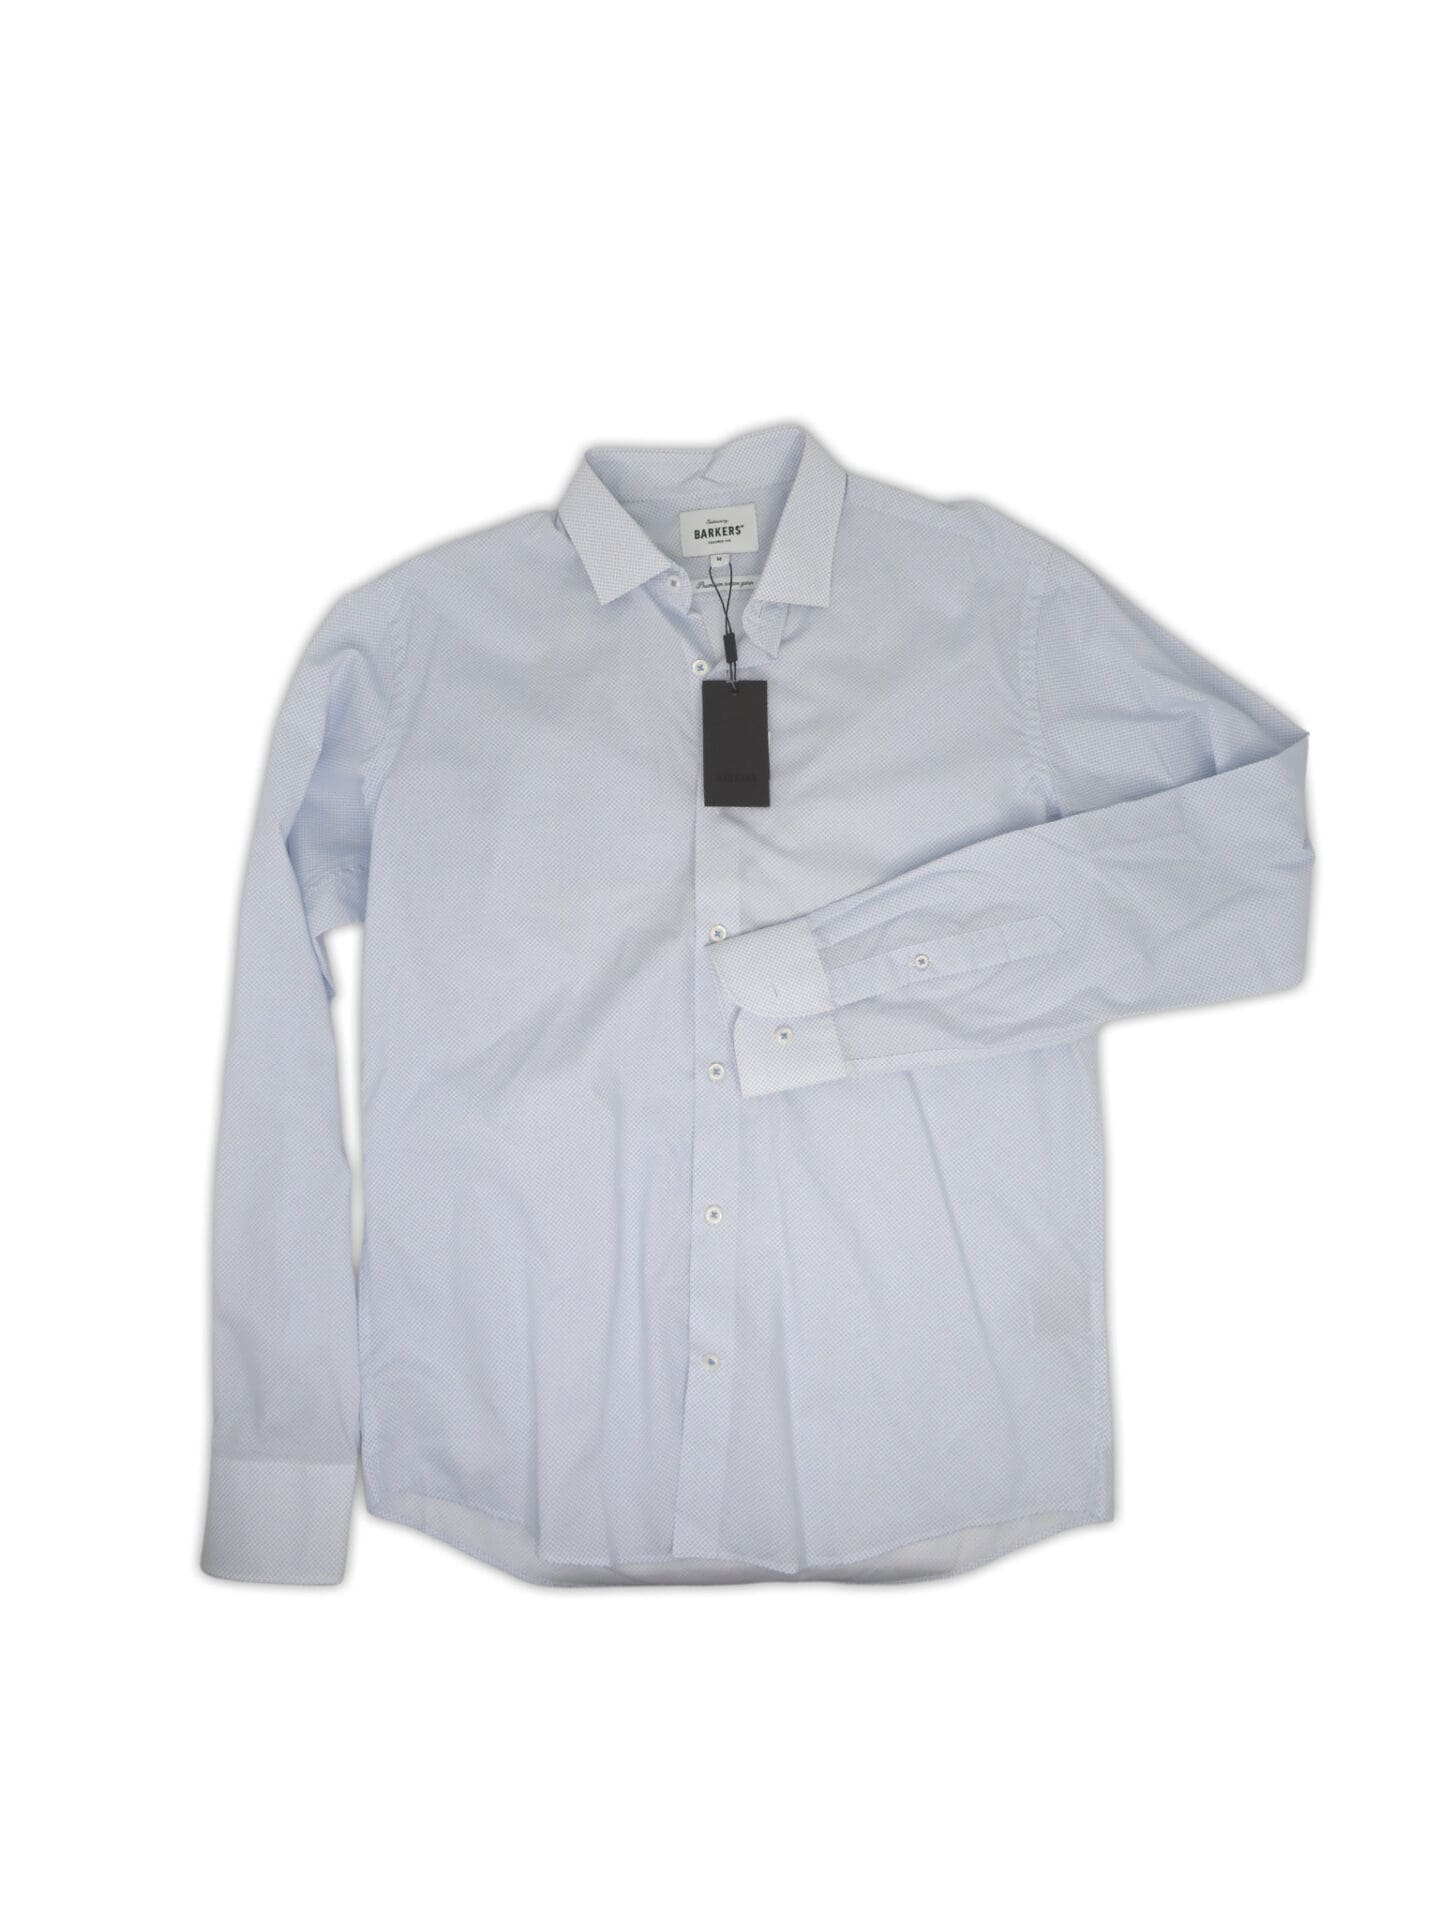 blue mens button up cotton shirt